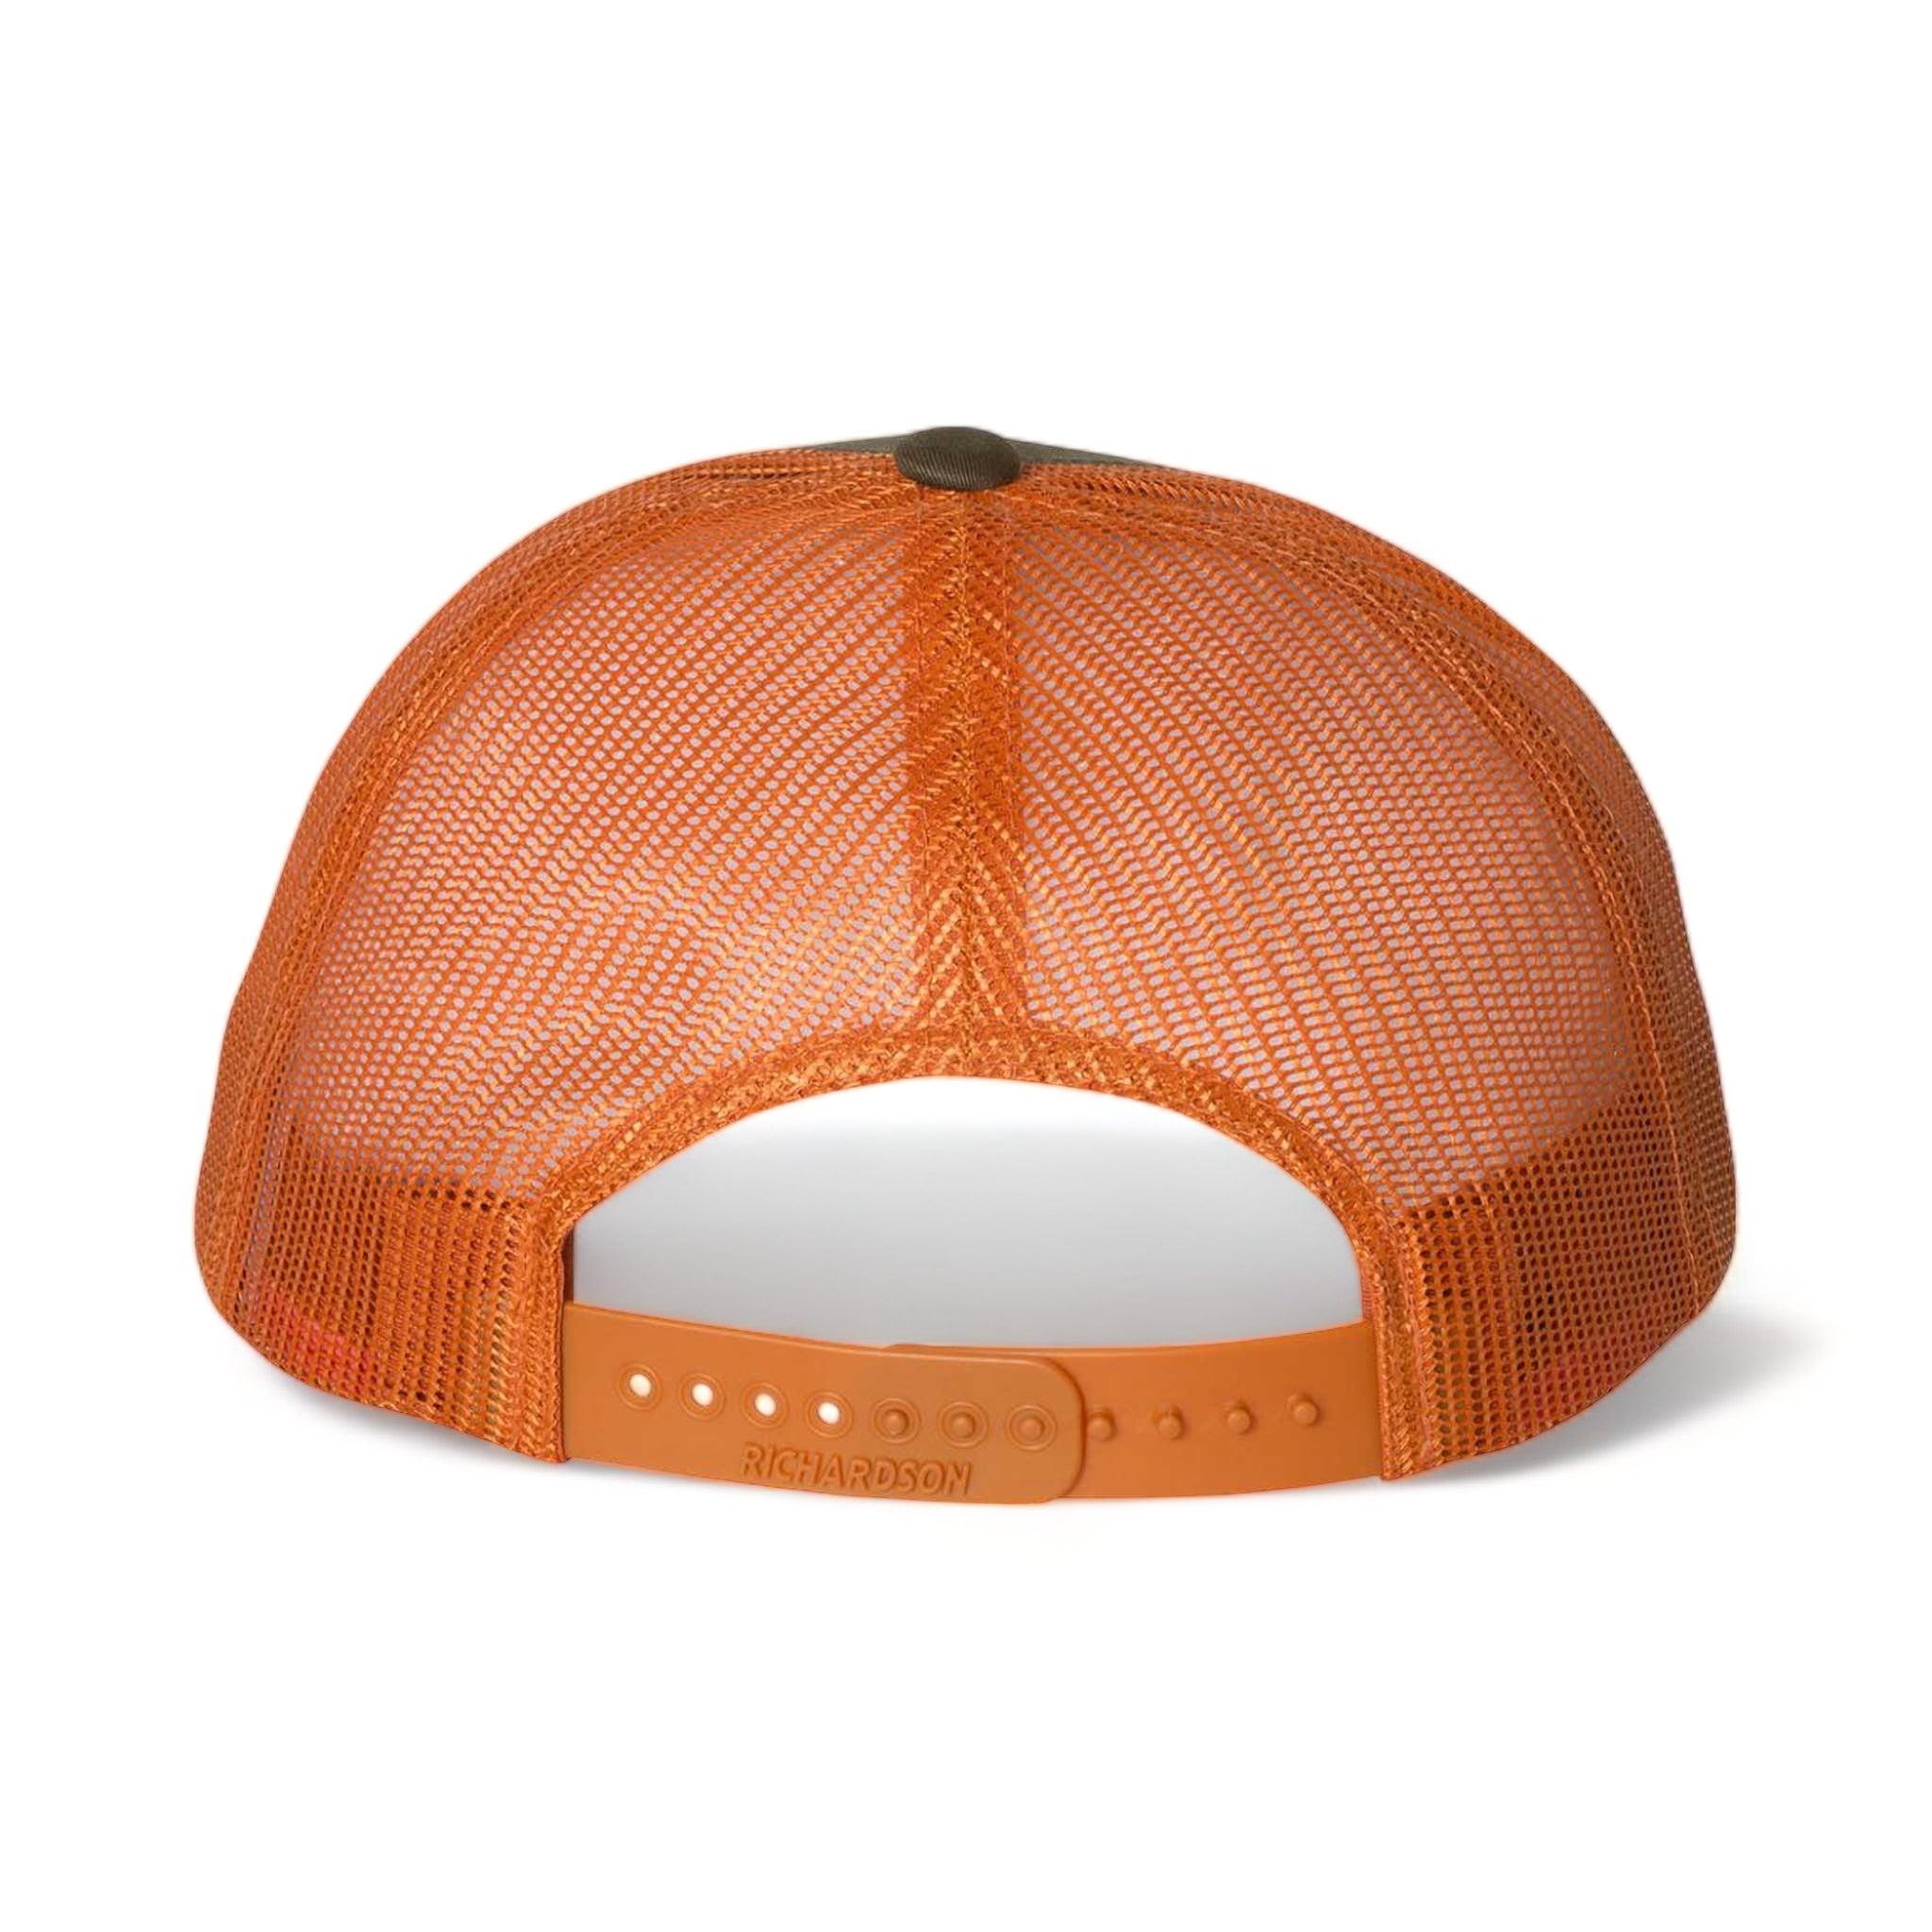 Back view of Richardson 115 custom hat in dark loden and jaffa orange